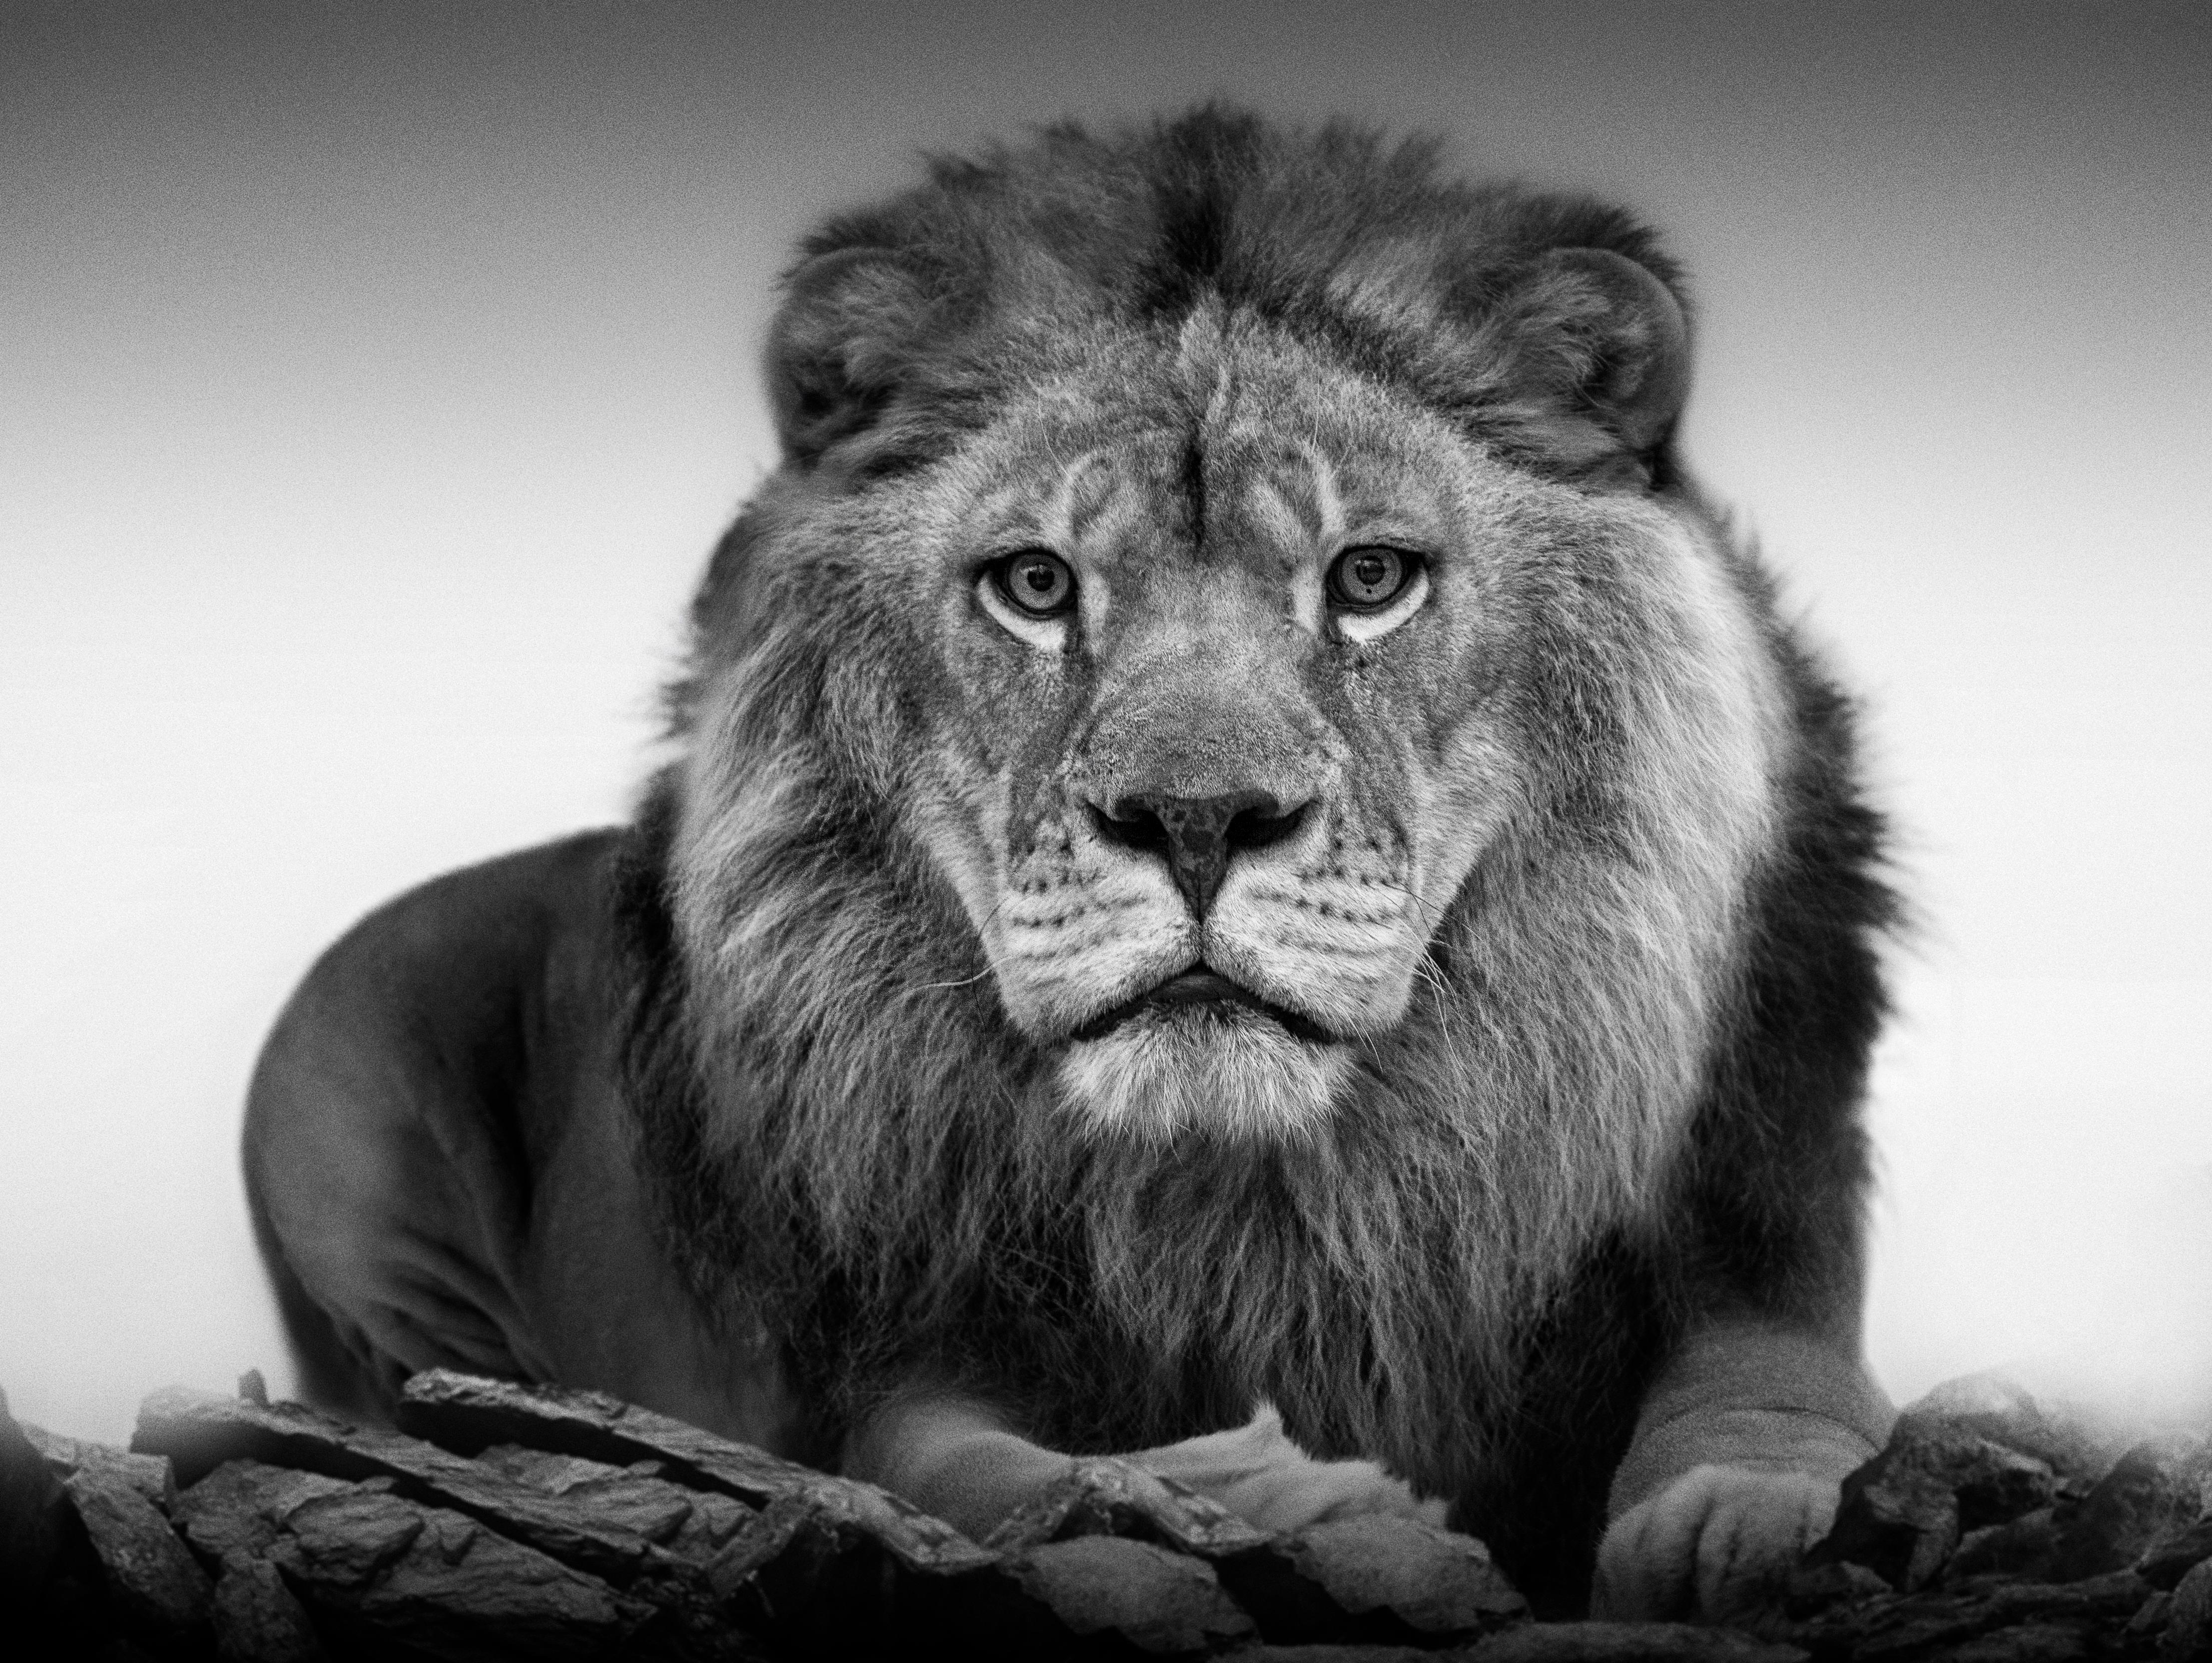 Shane Russeck Animal Print - 36x48  "Lion Portrait", Black and White Lion Photography  Photograph Signed Art